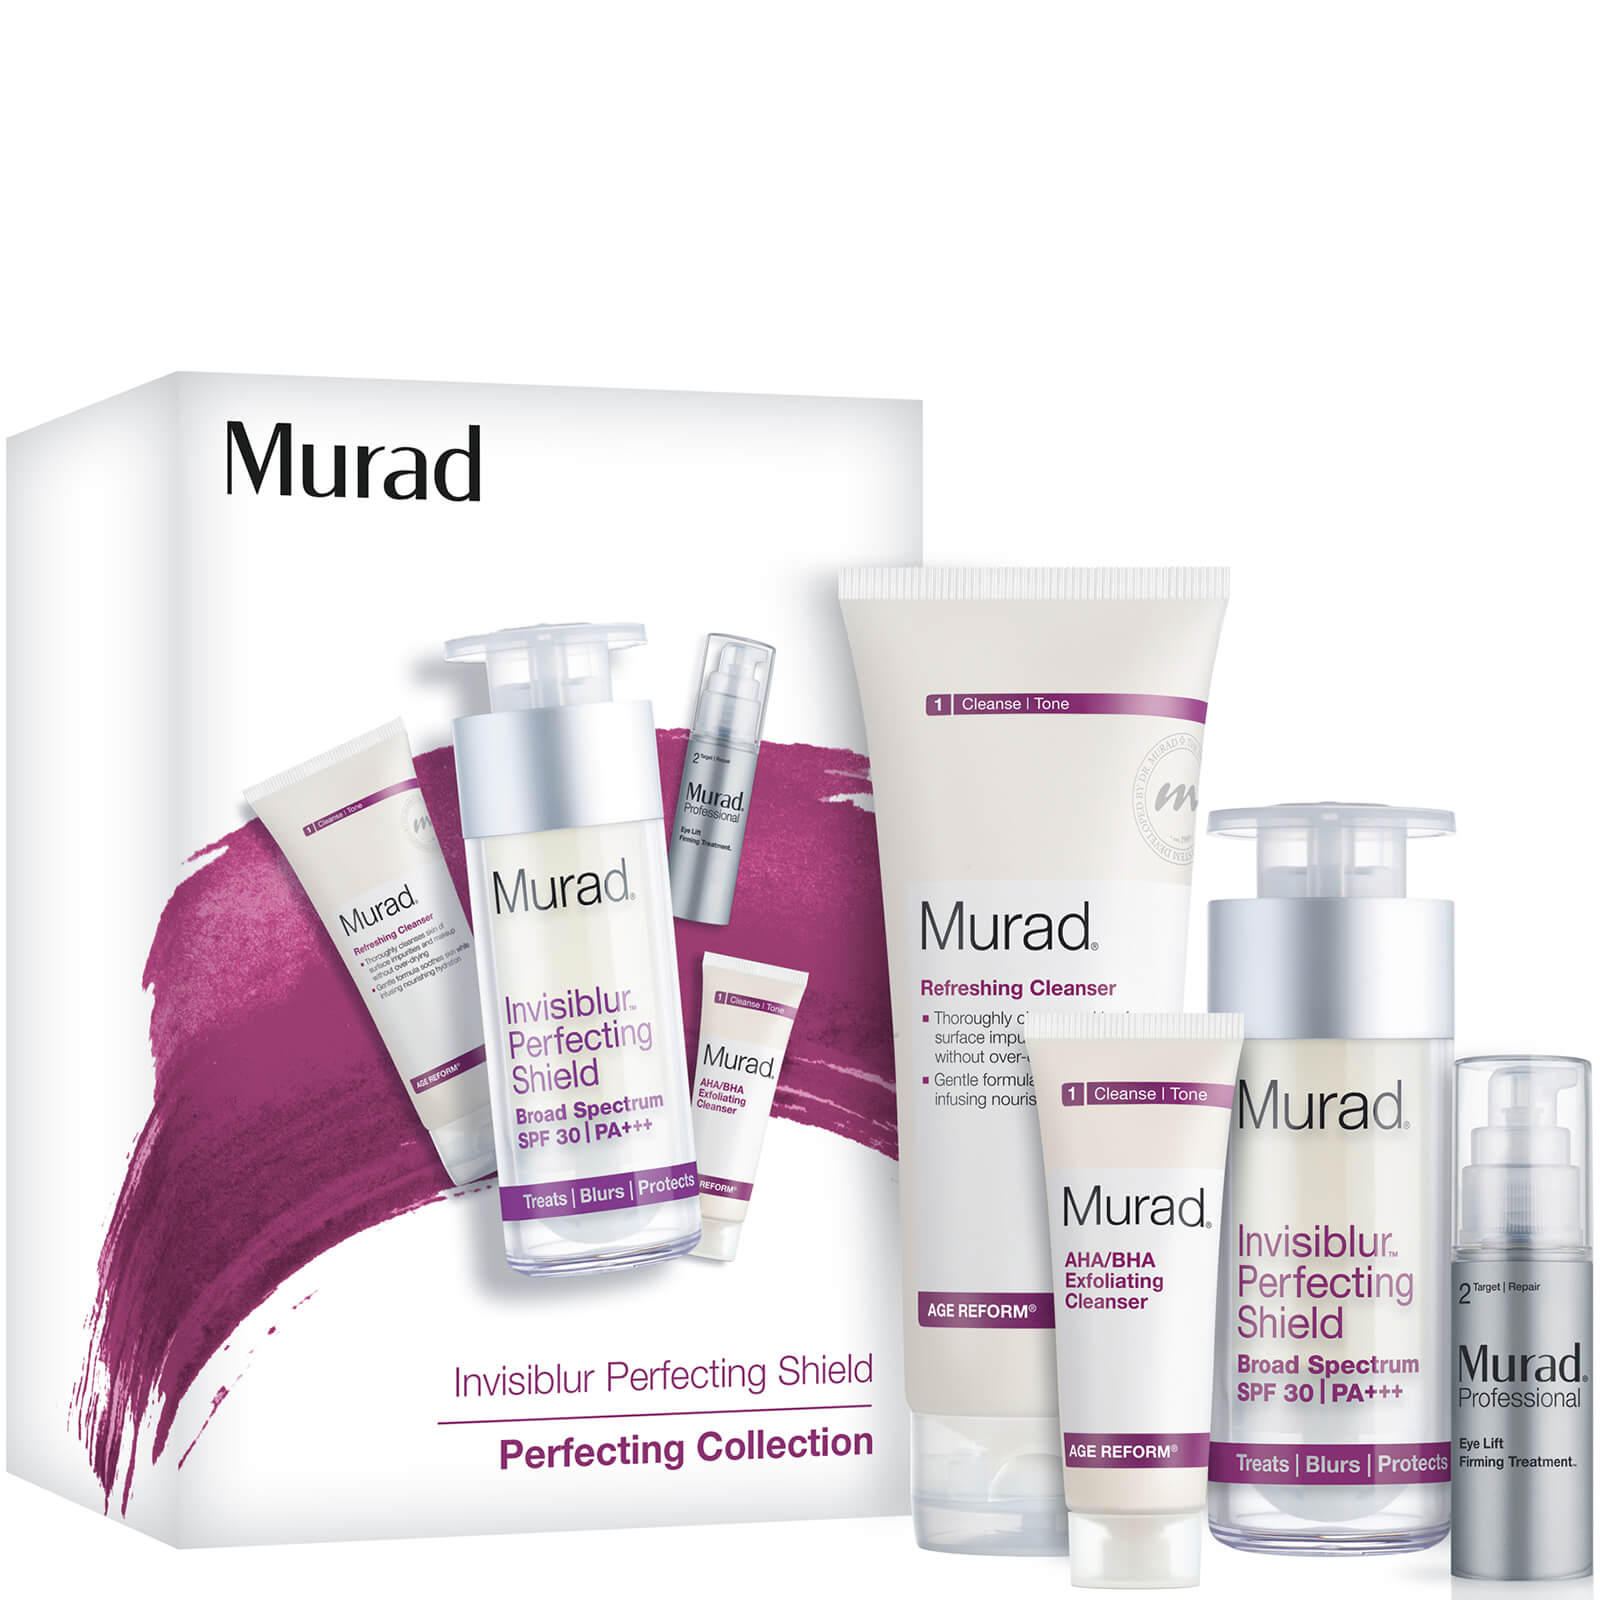 Murad Invisiblur Perfecting Collection